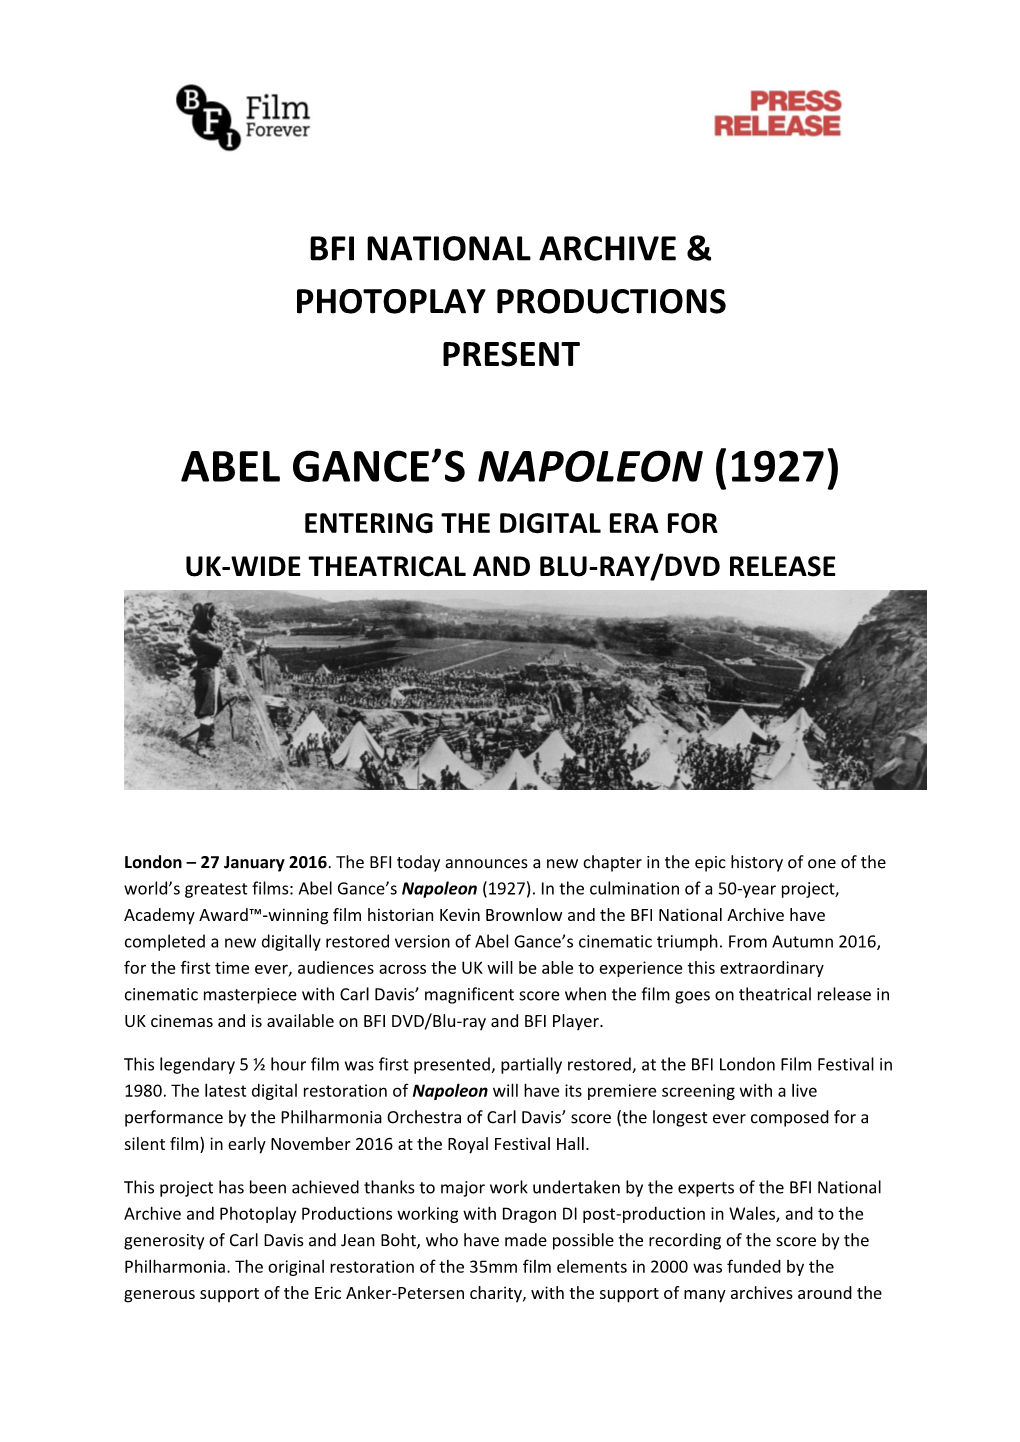 Abel Gance's Napoleon (1927)